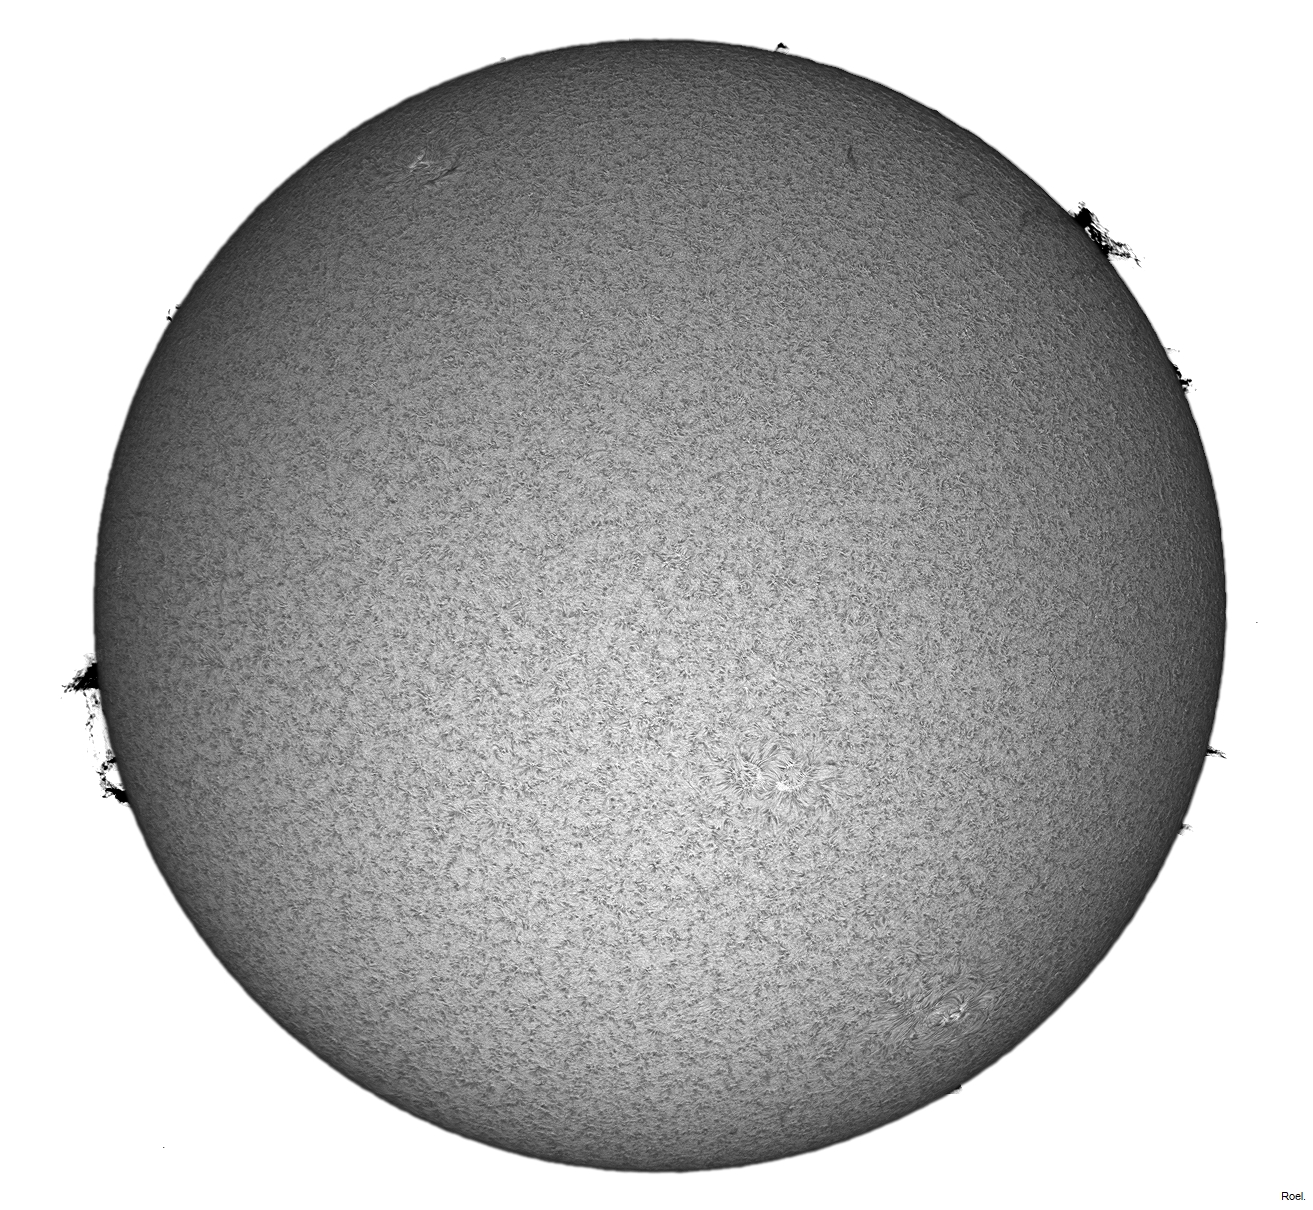 Sol del 7 de marzo del 2021-Solarmax 90-DS-BF30-1pos-neg.jpg